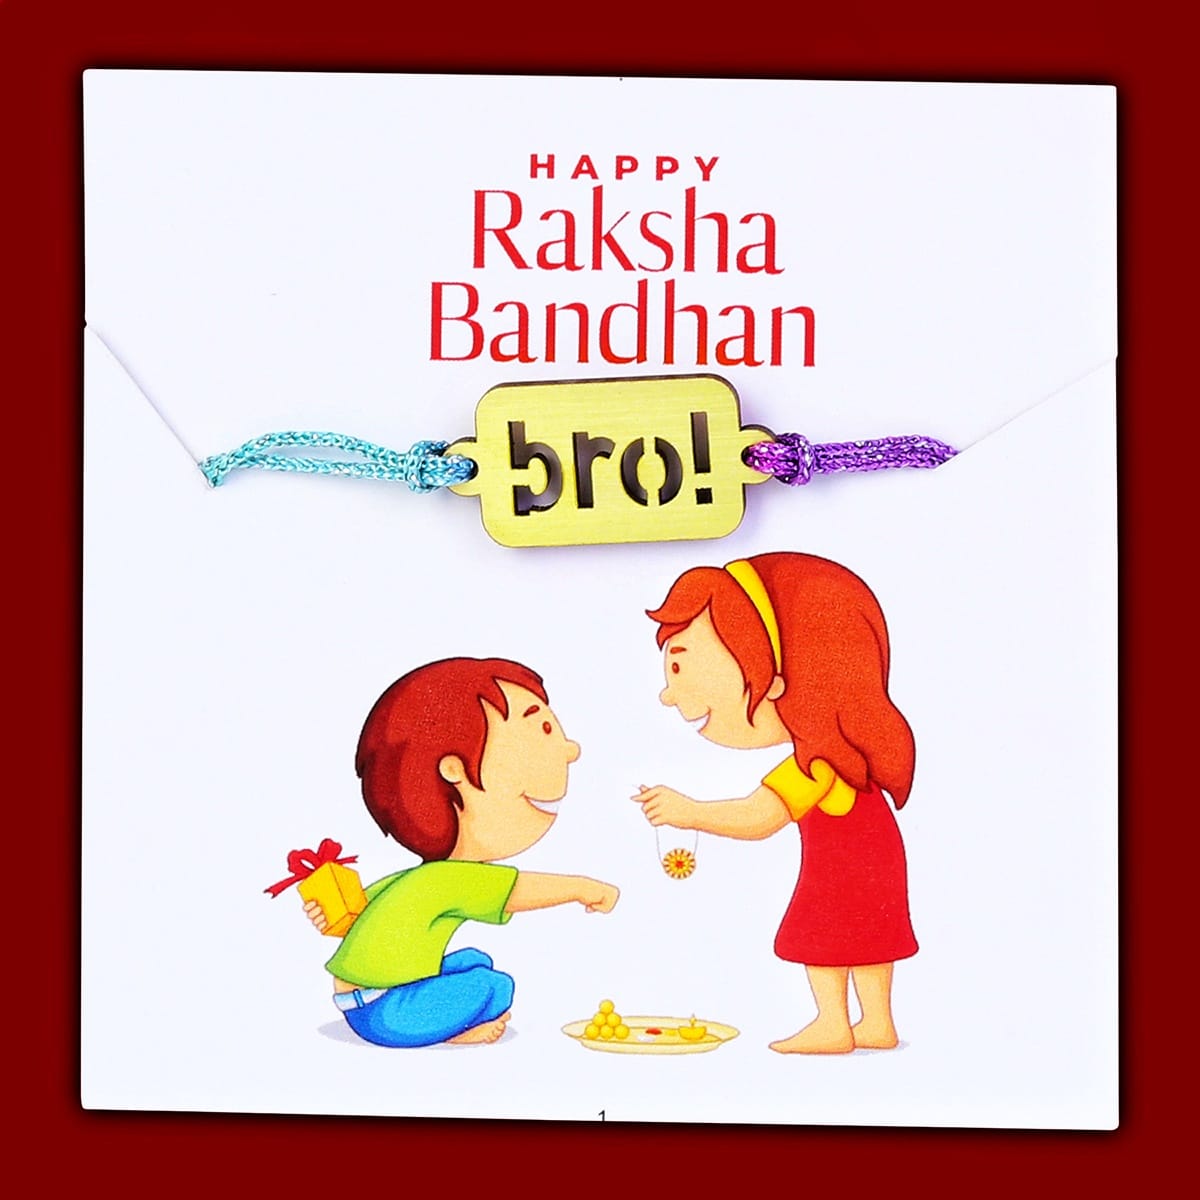 Unique Rakhi GIft Ideas for Brother Online Greeting Card by Raksha Bandha